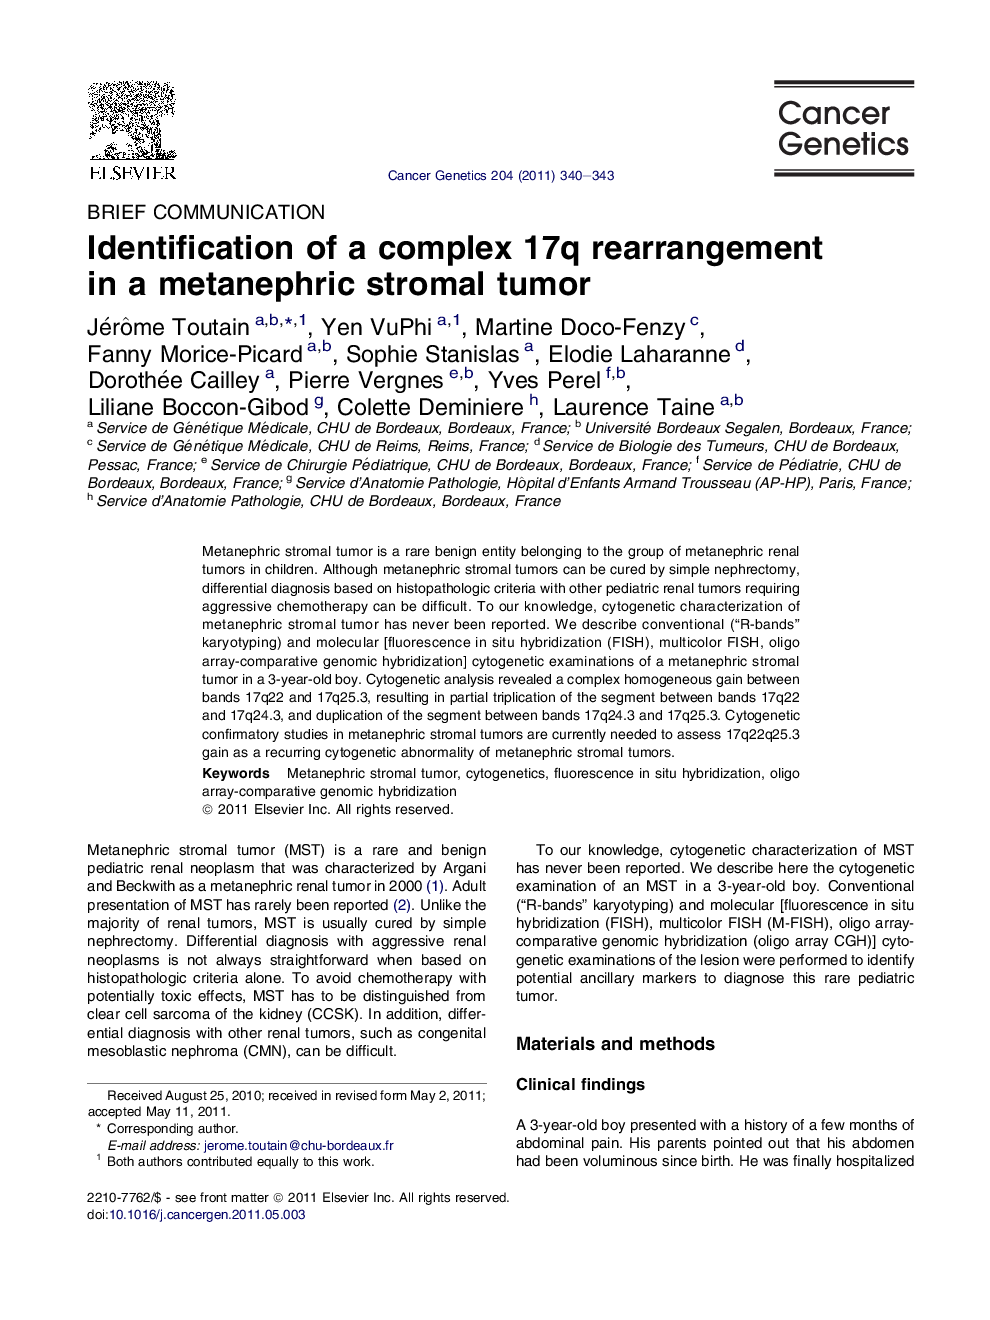 Identification of a complex 17q rearrangement in a metanephric stromal tumor